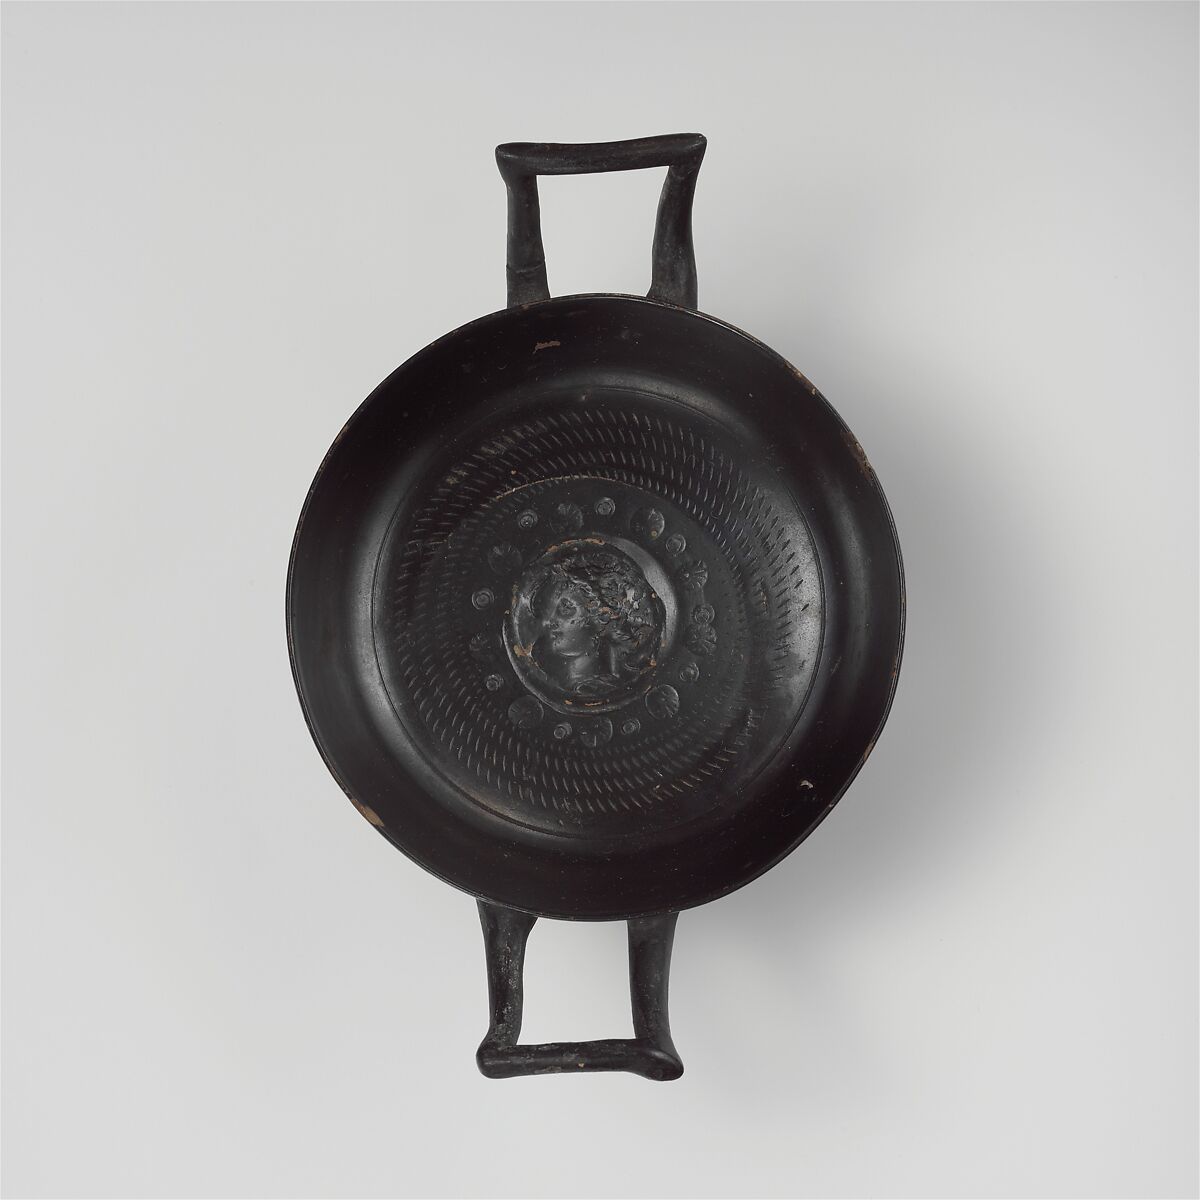 Terracotta stemless kylix (drinking cup), Terracotta, Greek, South Italian, Campanian, Calenian 